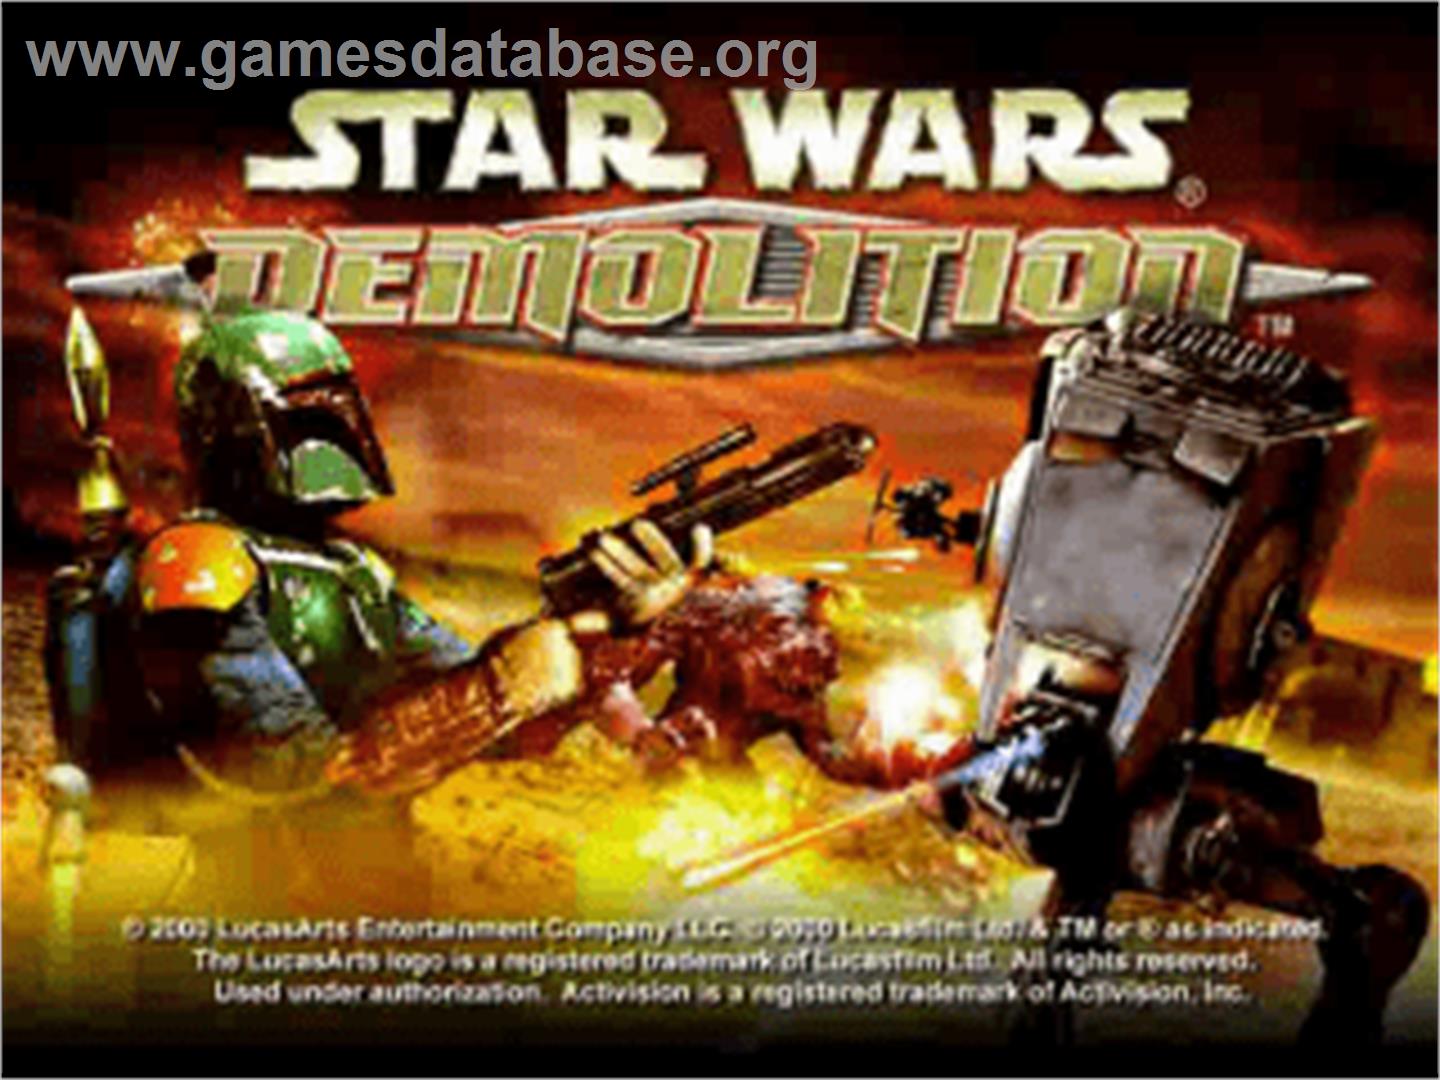 Star Wars: Demolition - Sony Playstation - Artwork - Title Screen